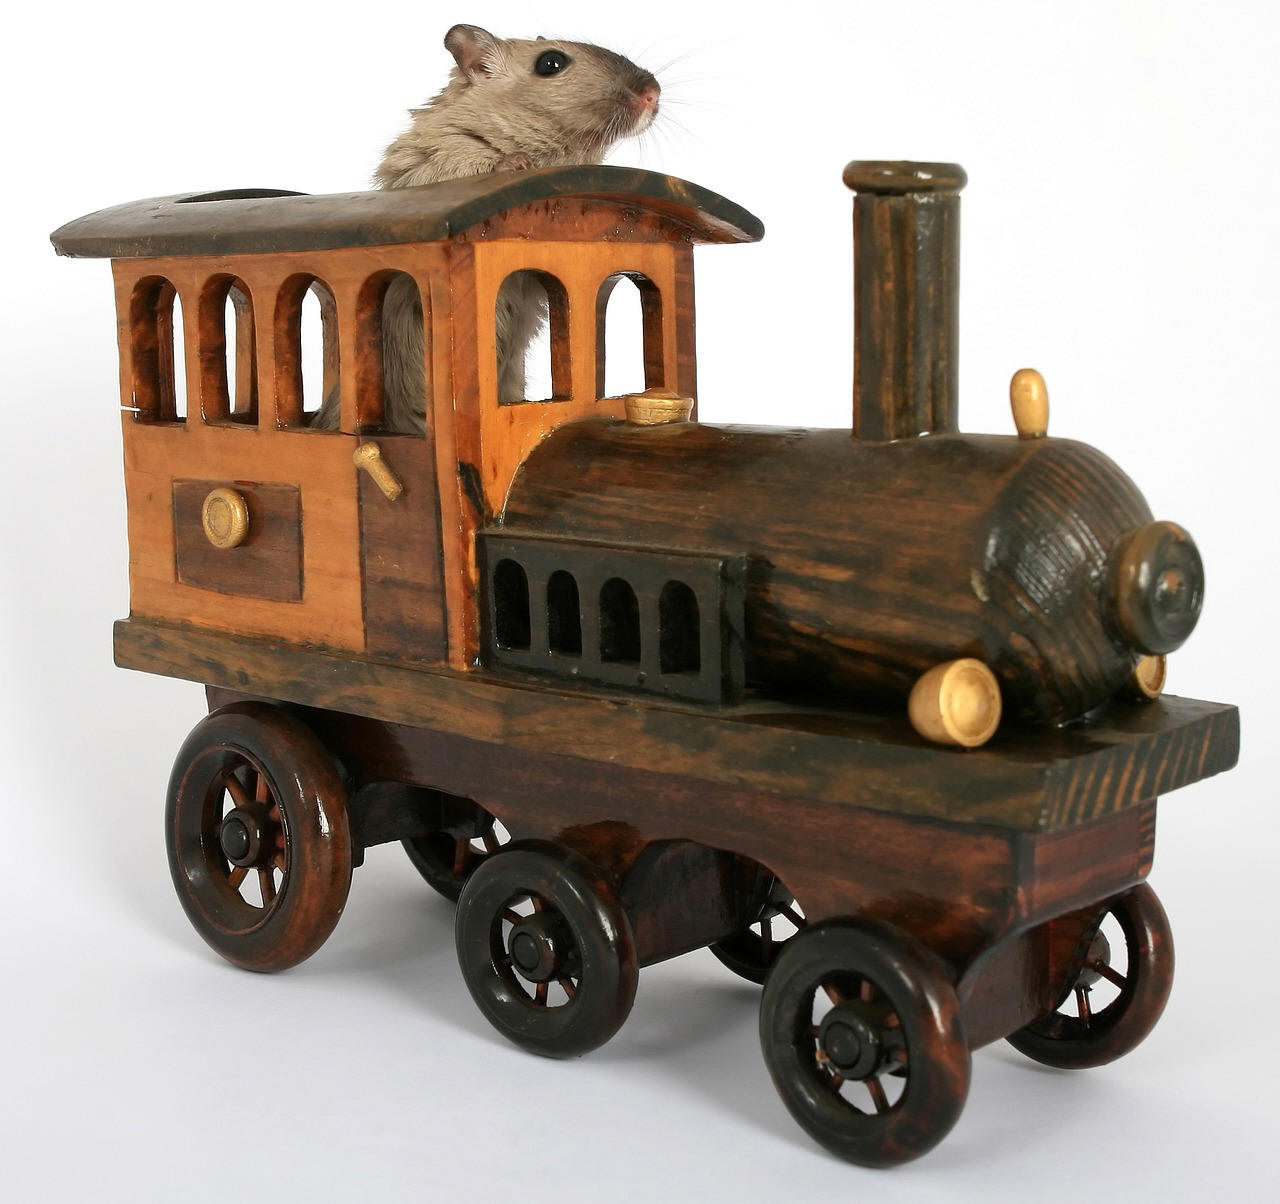 Mouse Inside Wooden Locomotive